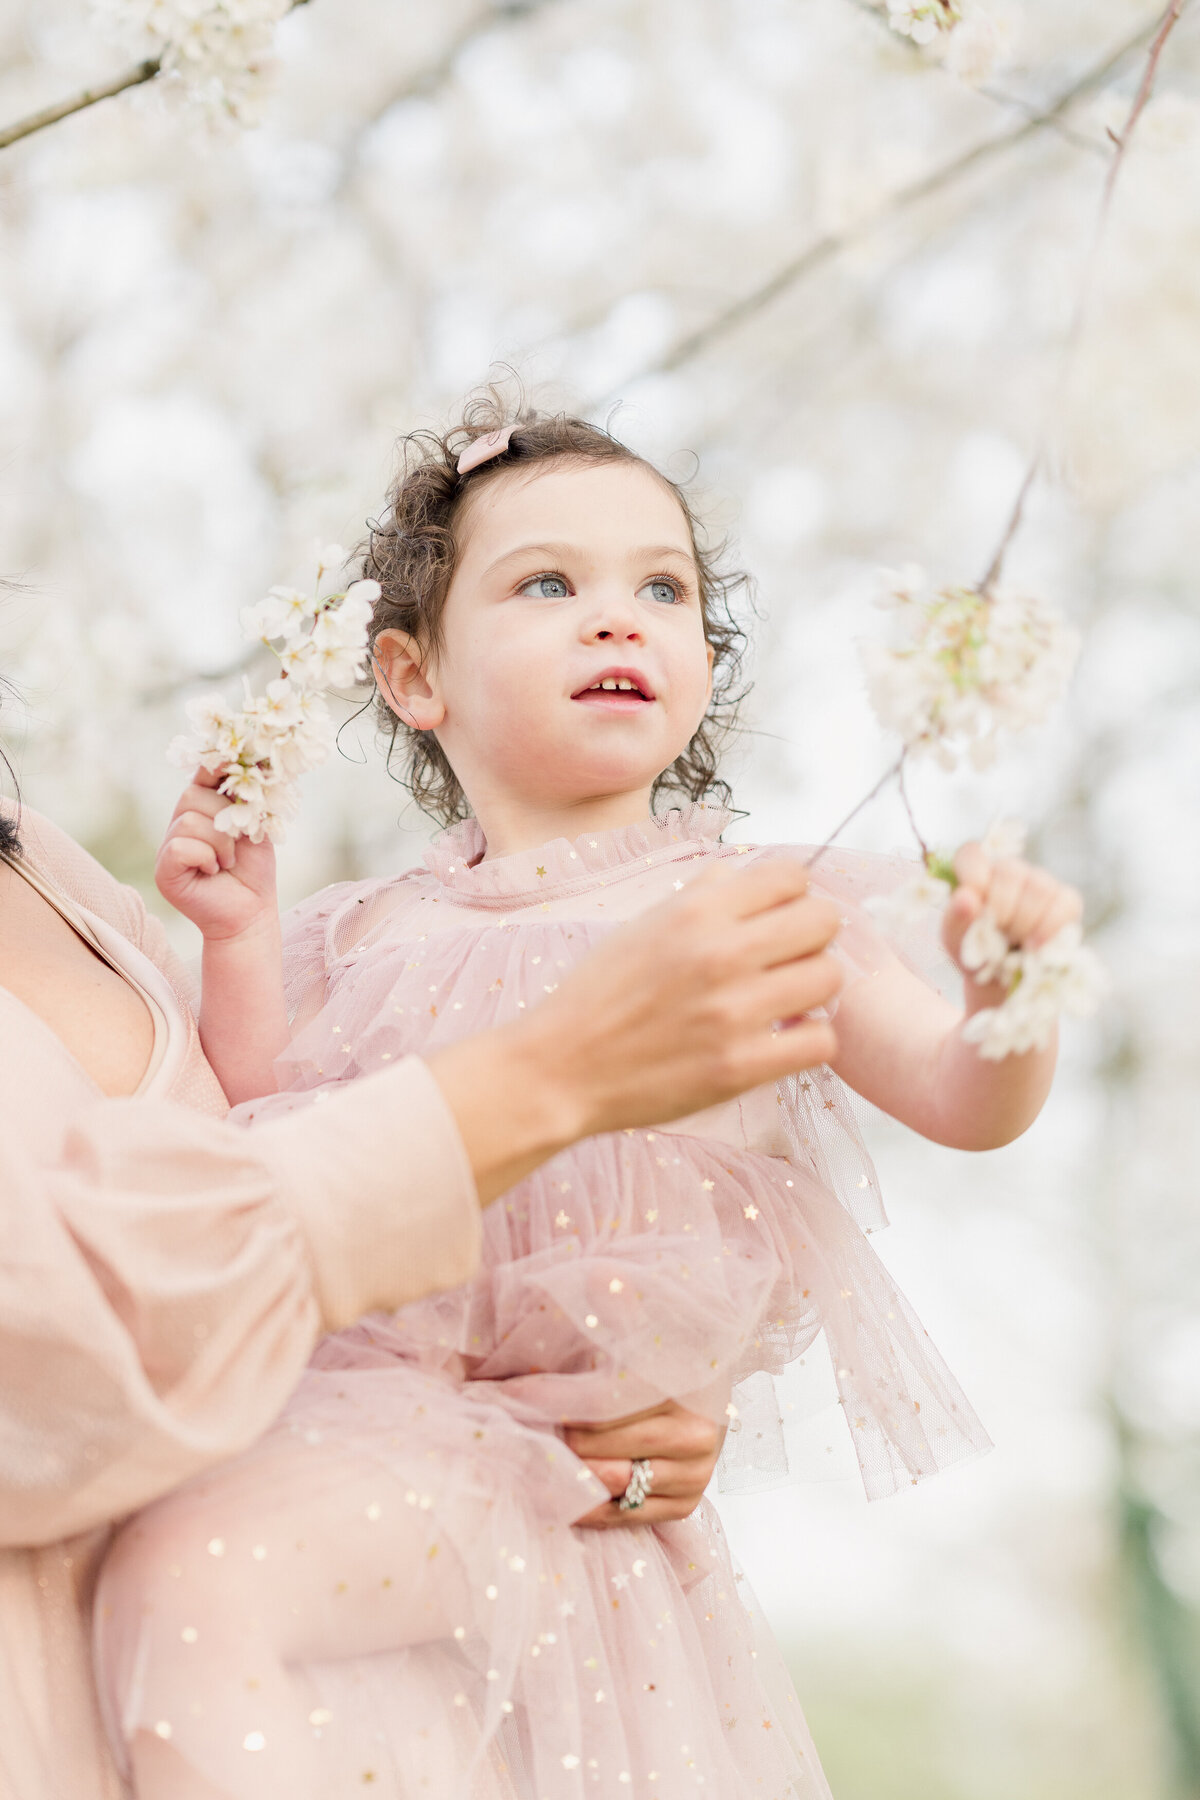 Courtney-Landrum-Photography-Motherhood-Cherry-Blossoms-14